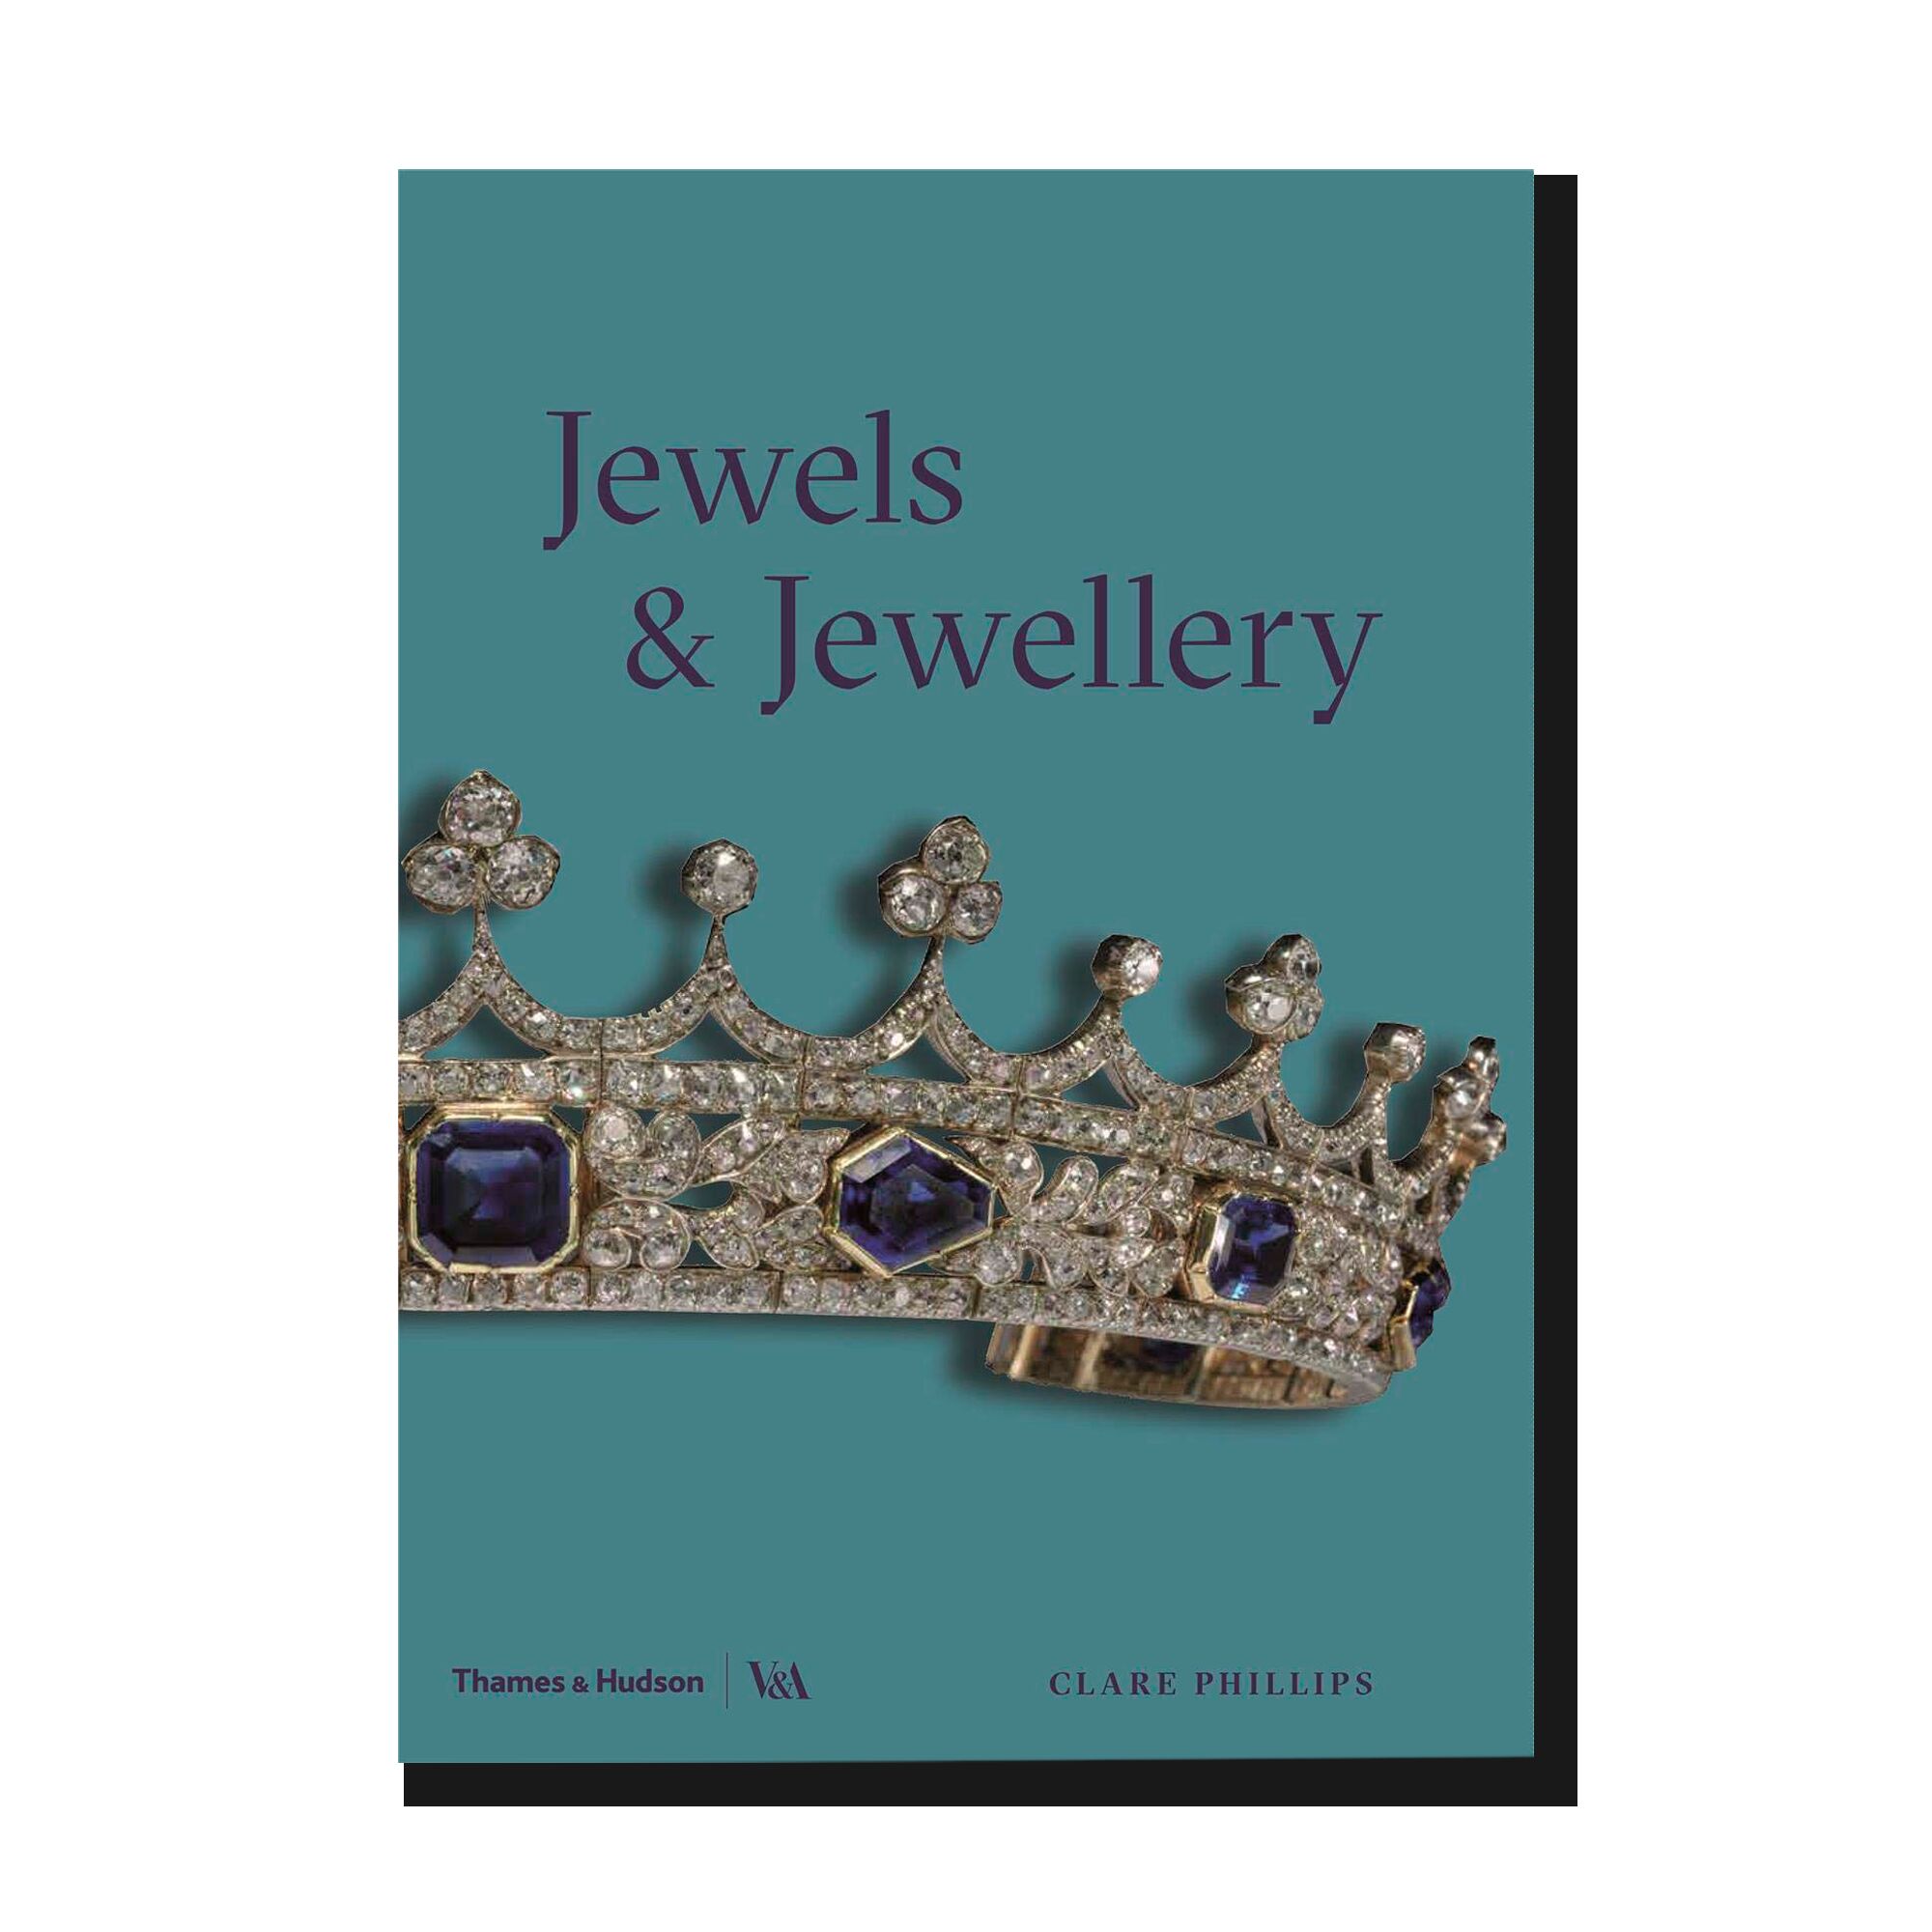 Jewels and Jewelry